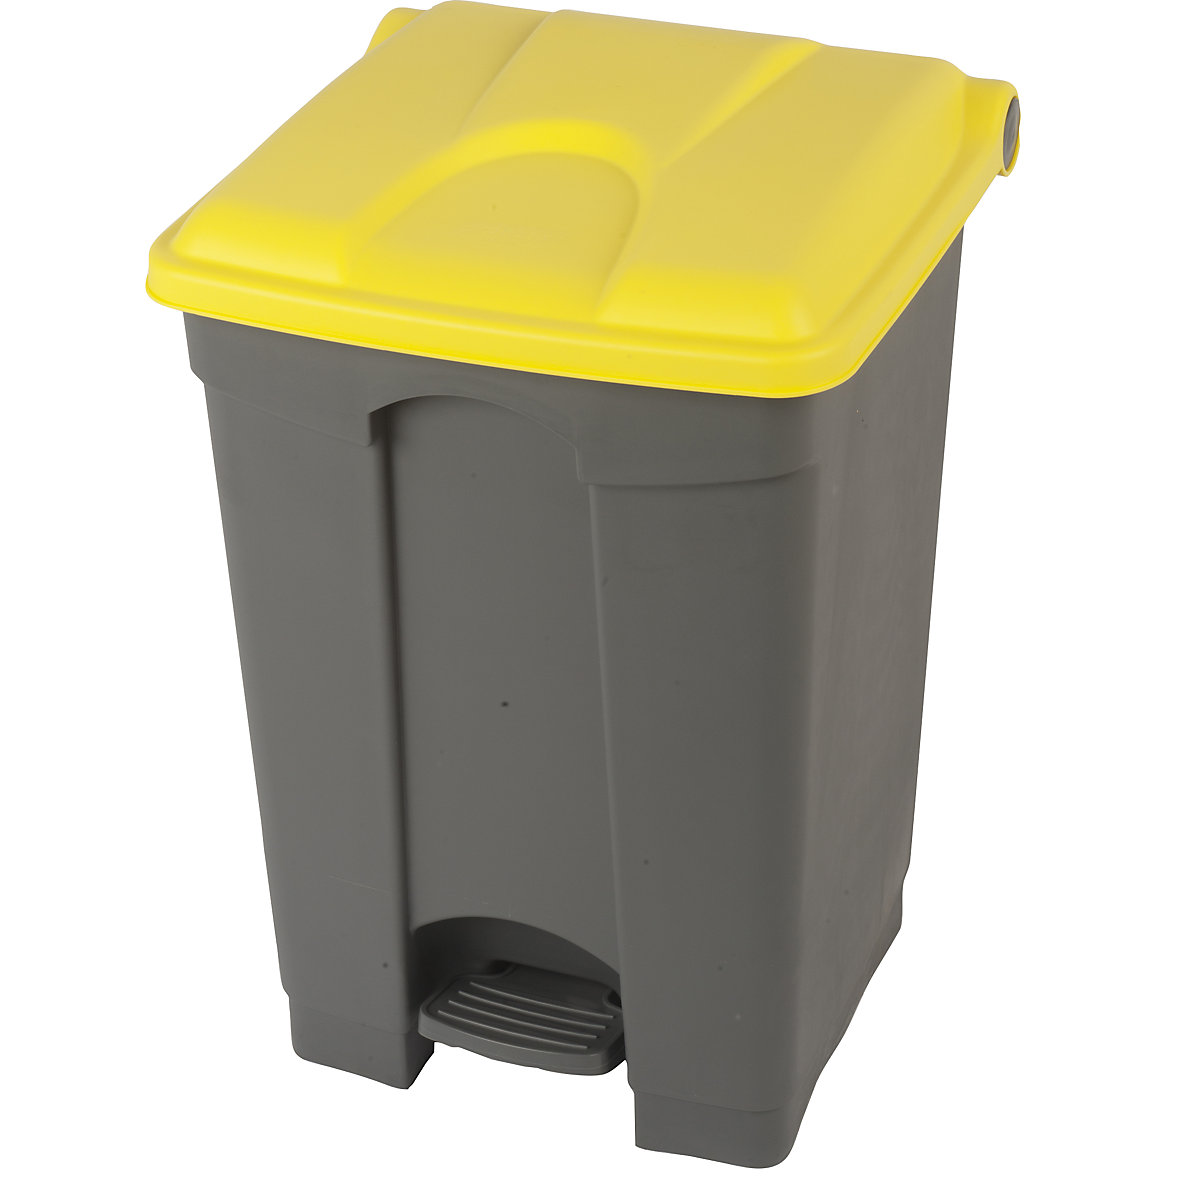 EUROKRAFTbasic – Pedal waste collector, capacity 45 l, WxHxD 410 x 600 x 400 mm, grey, yellow lid